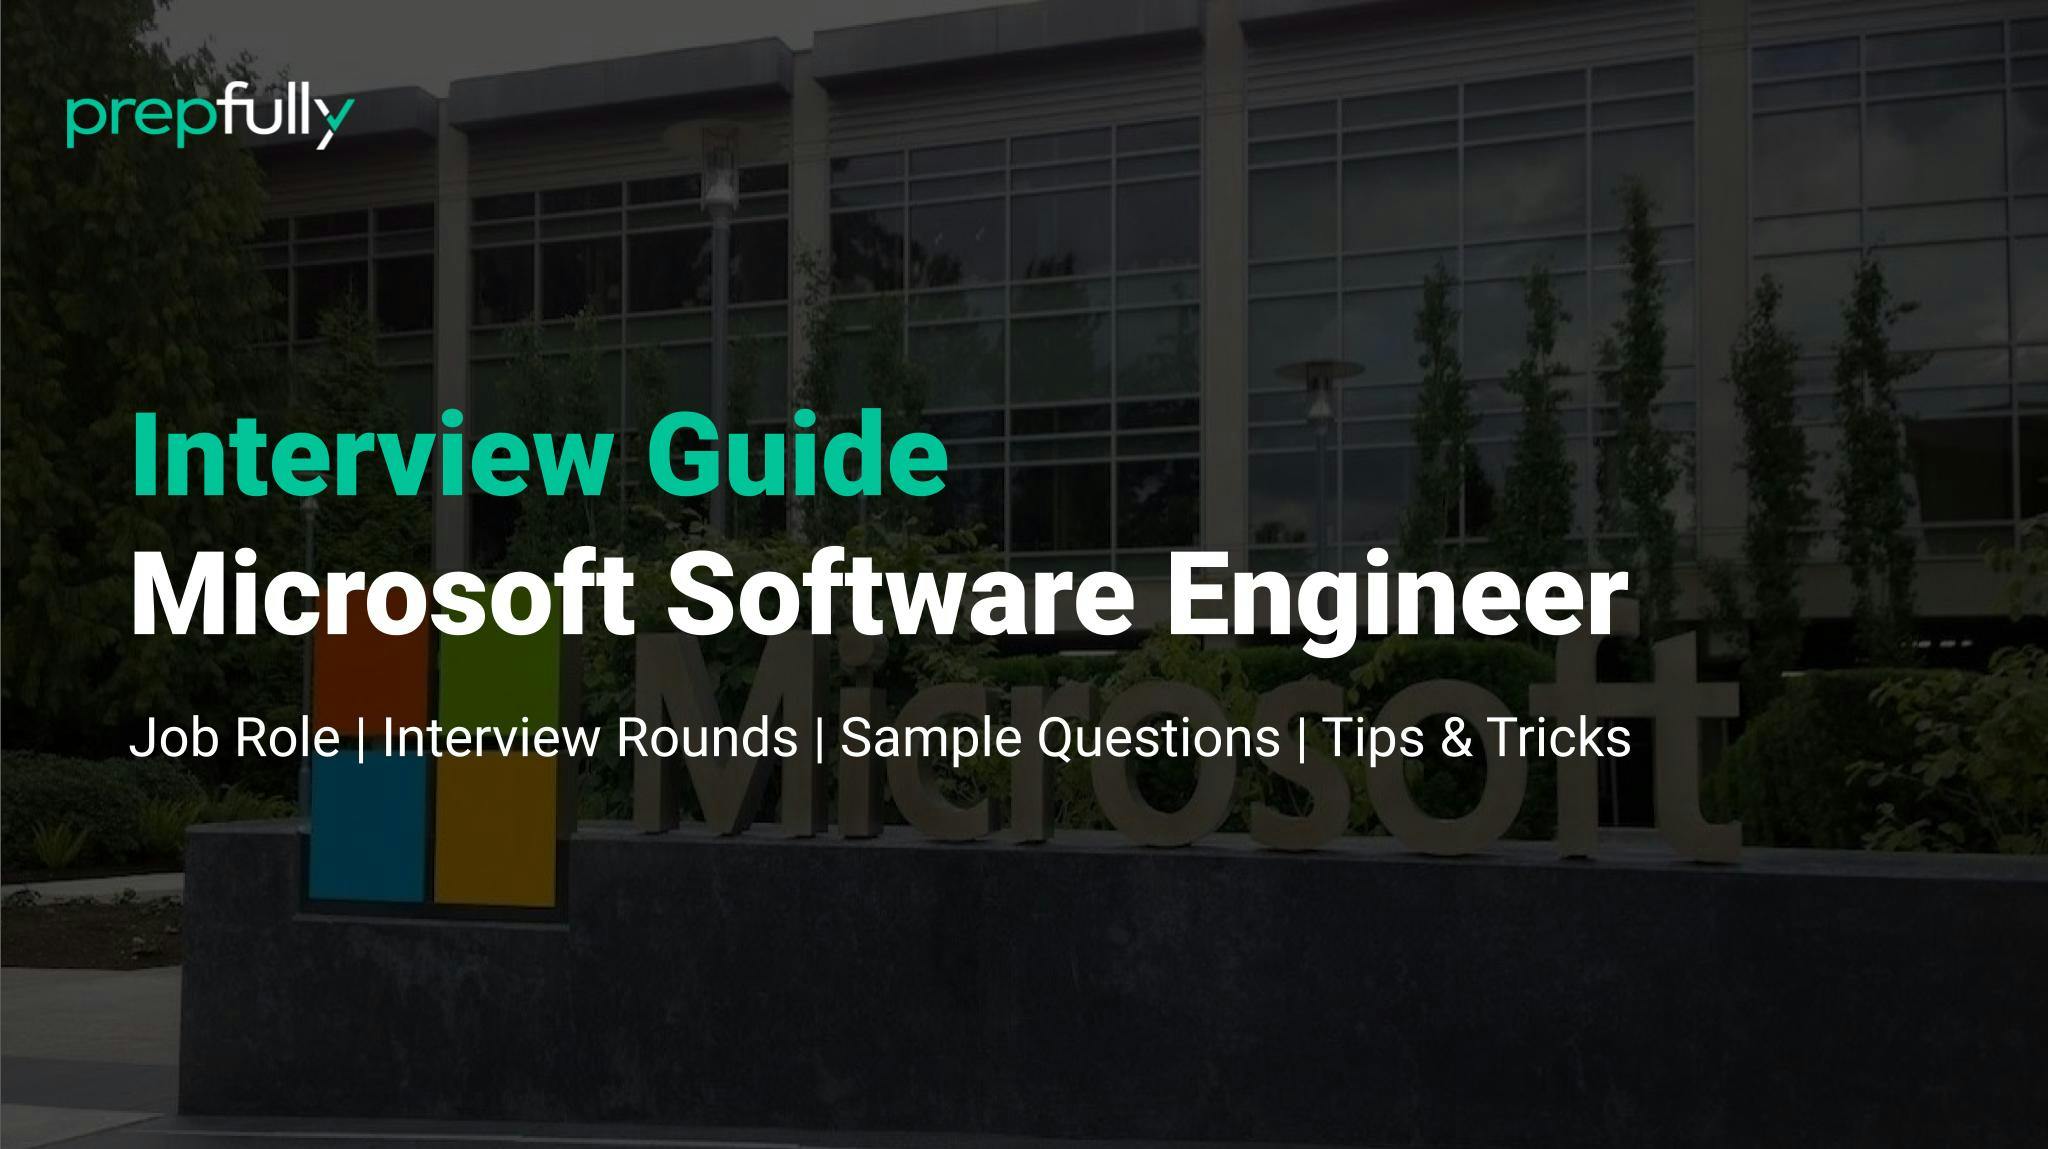 software engineer interview presentation